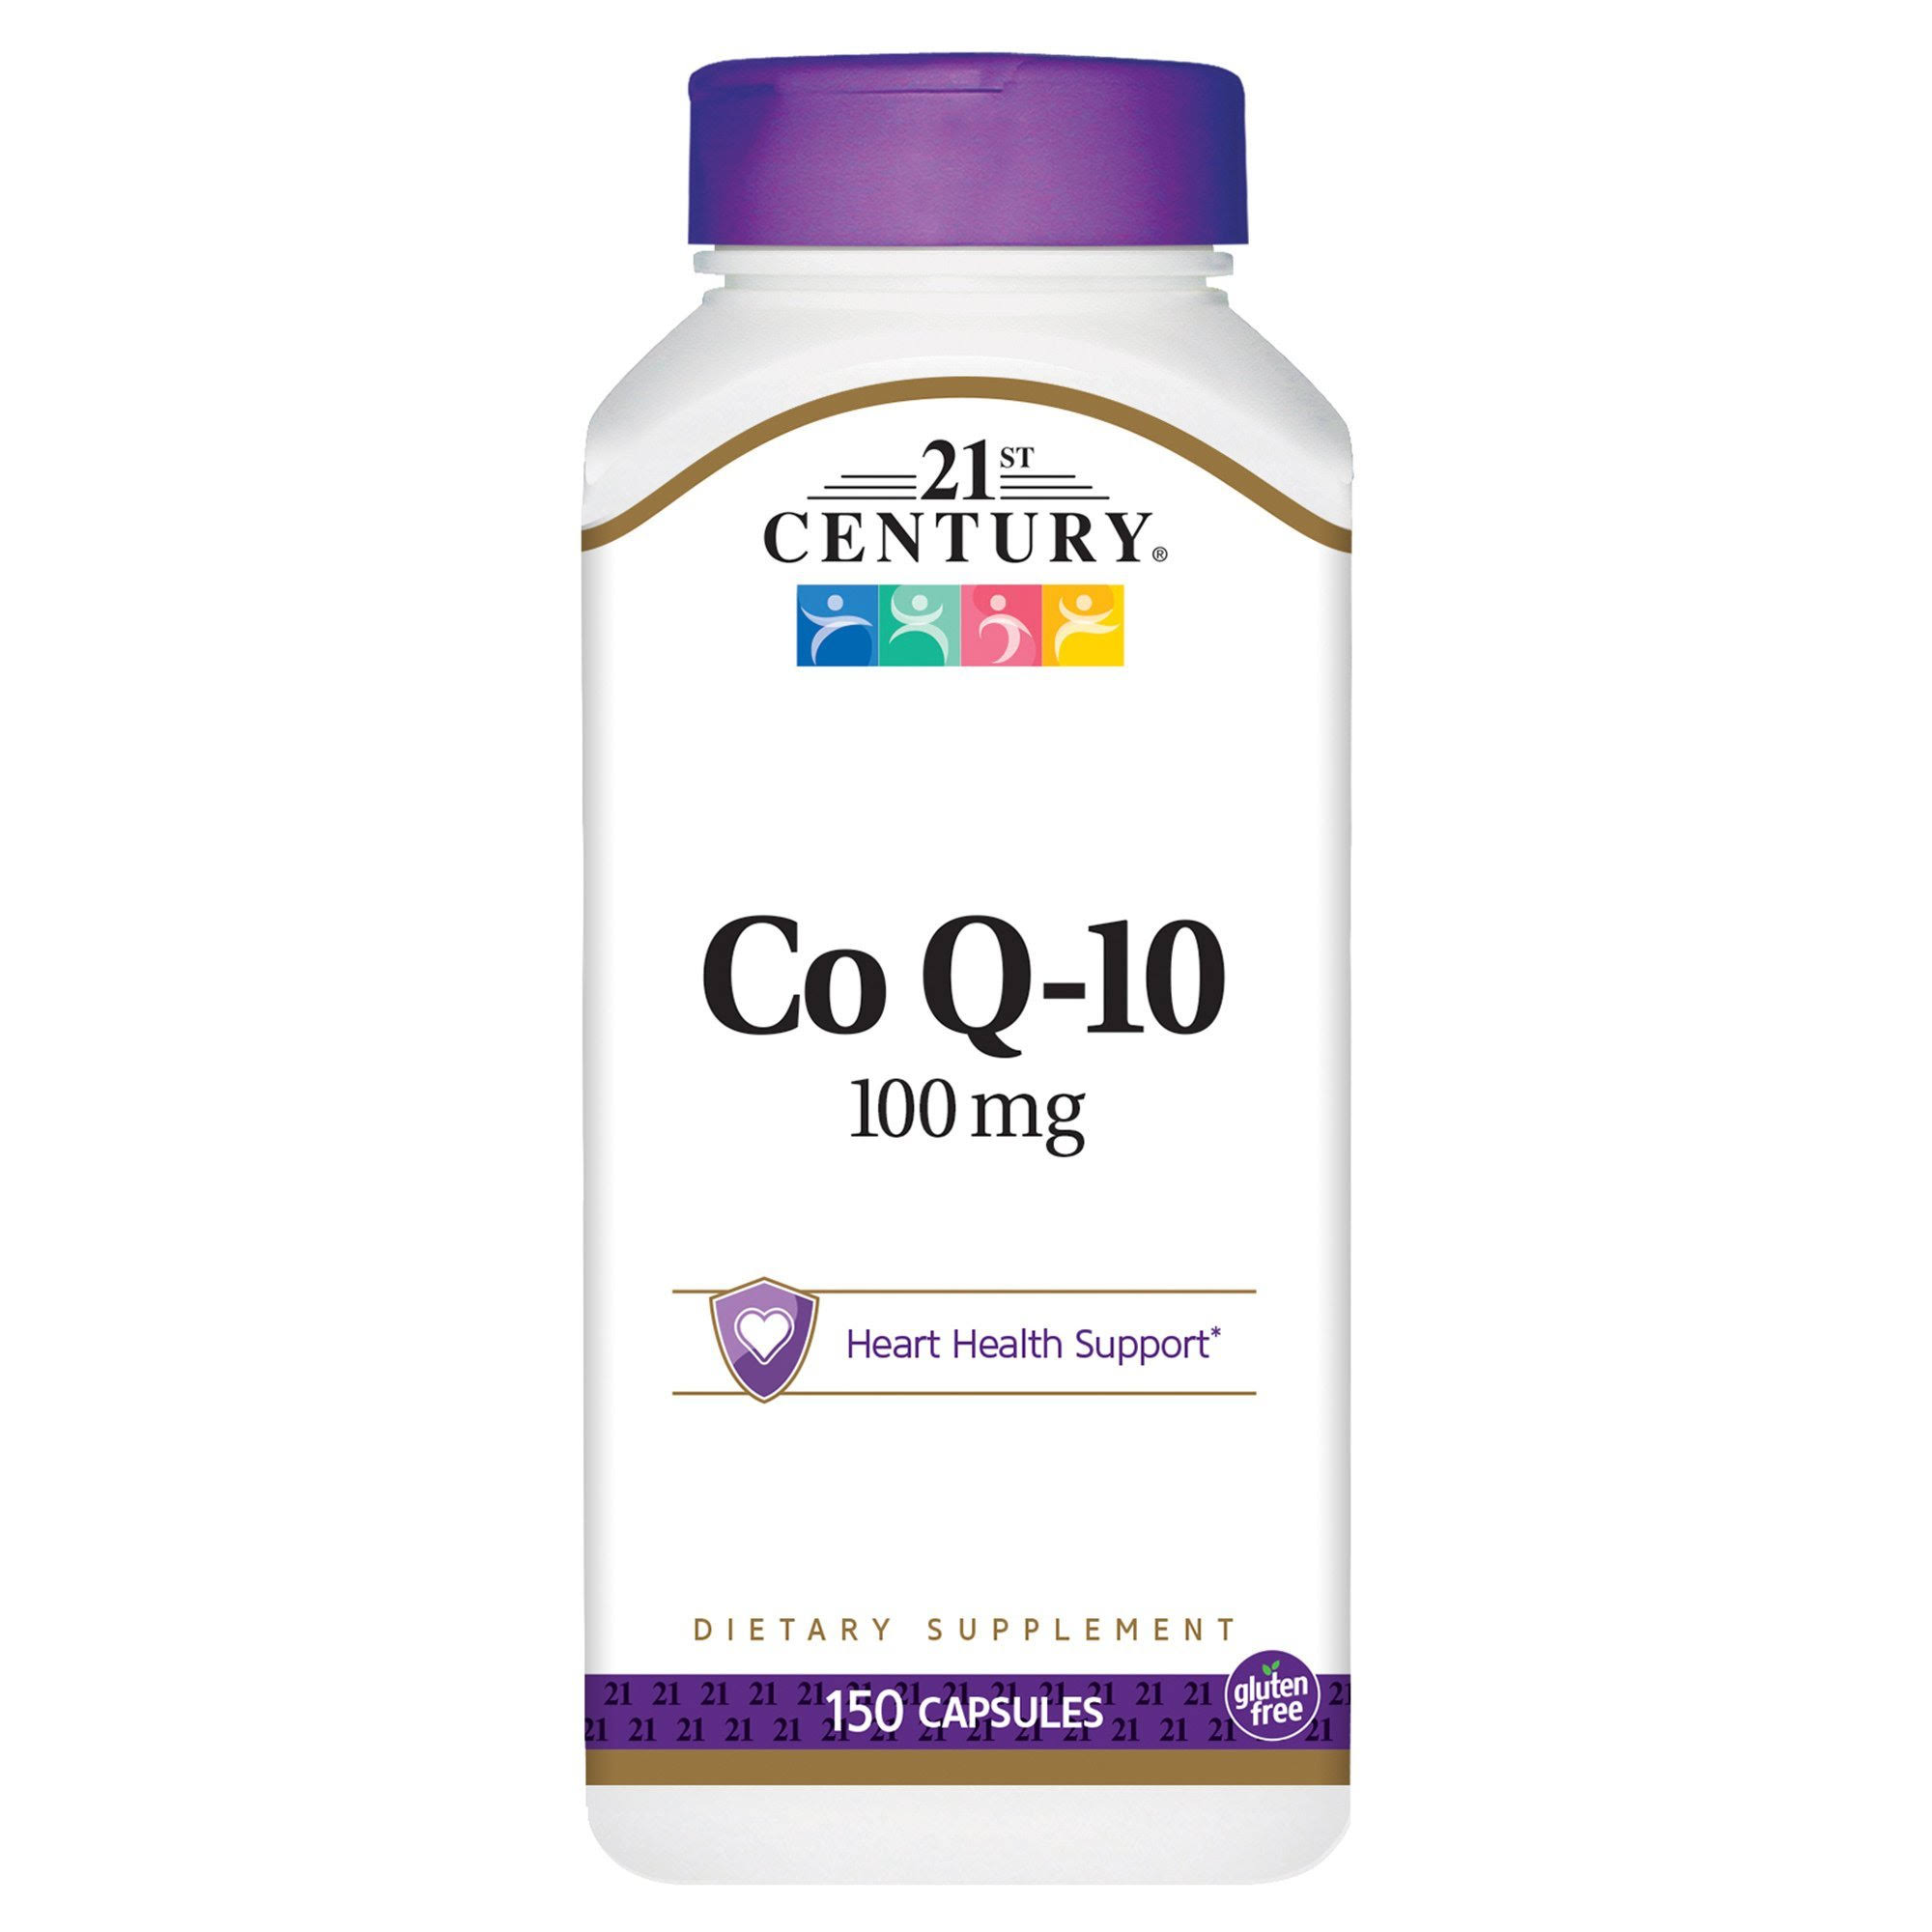 21st Century Co Q-10 Supplement - 100mg, 150 Capsules